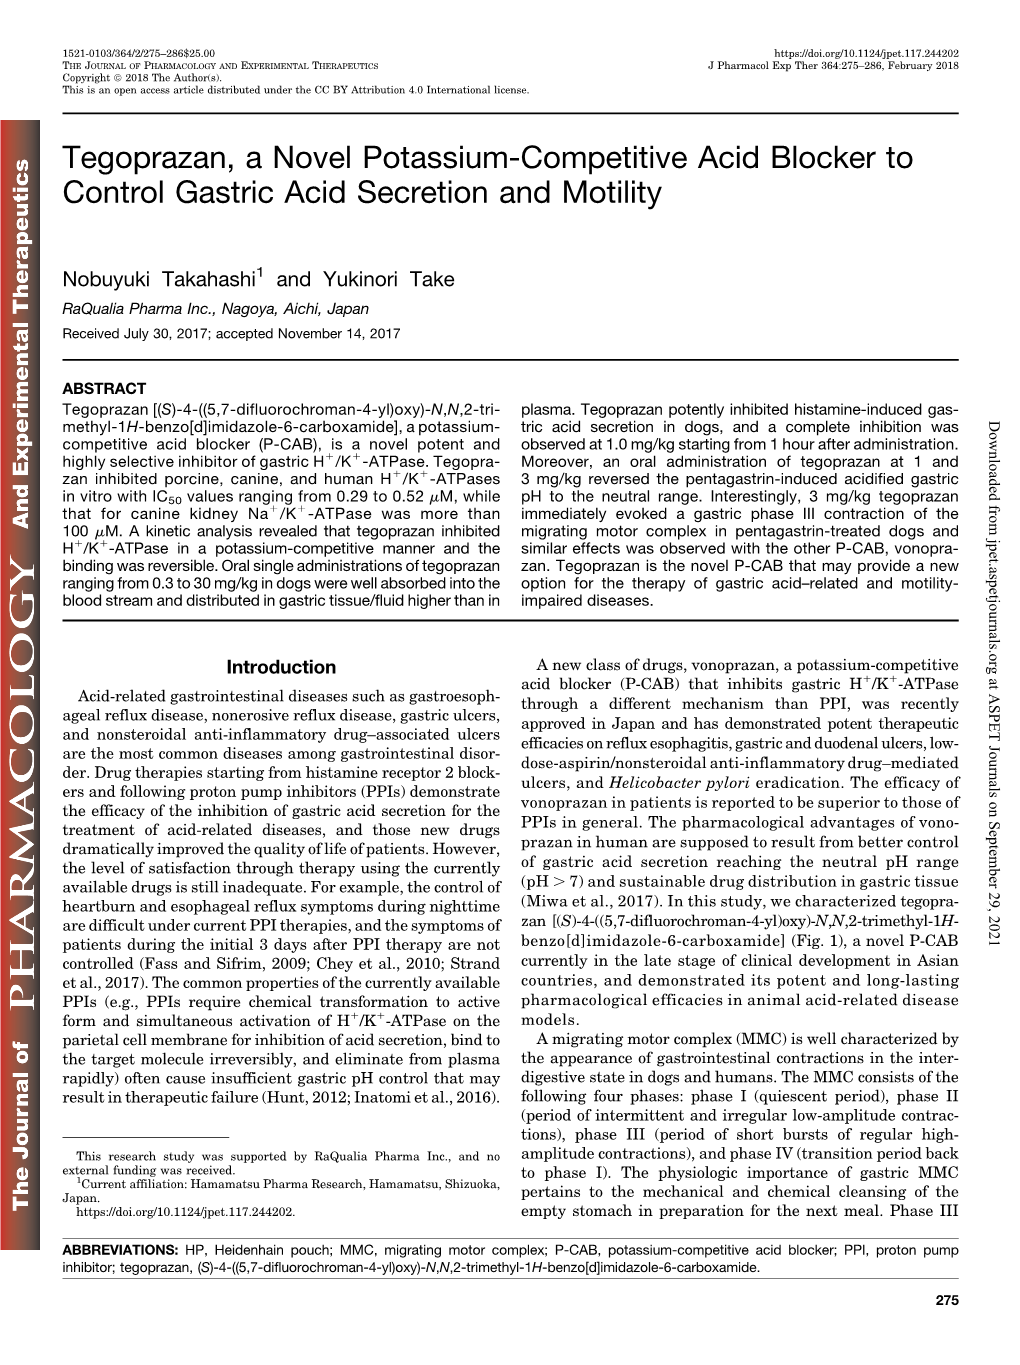 Tegoprazan, a Novel Potassium-Competitive Acid Blocker to Control Gastric Acid Secretion and Motility